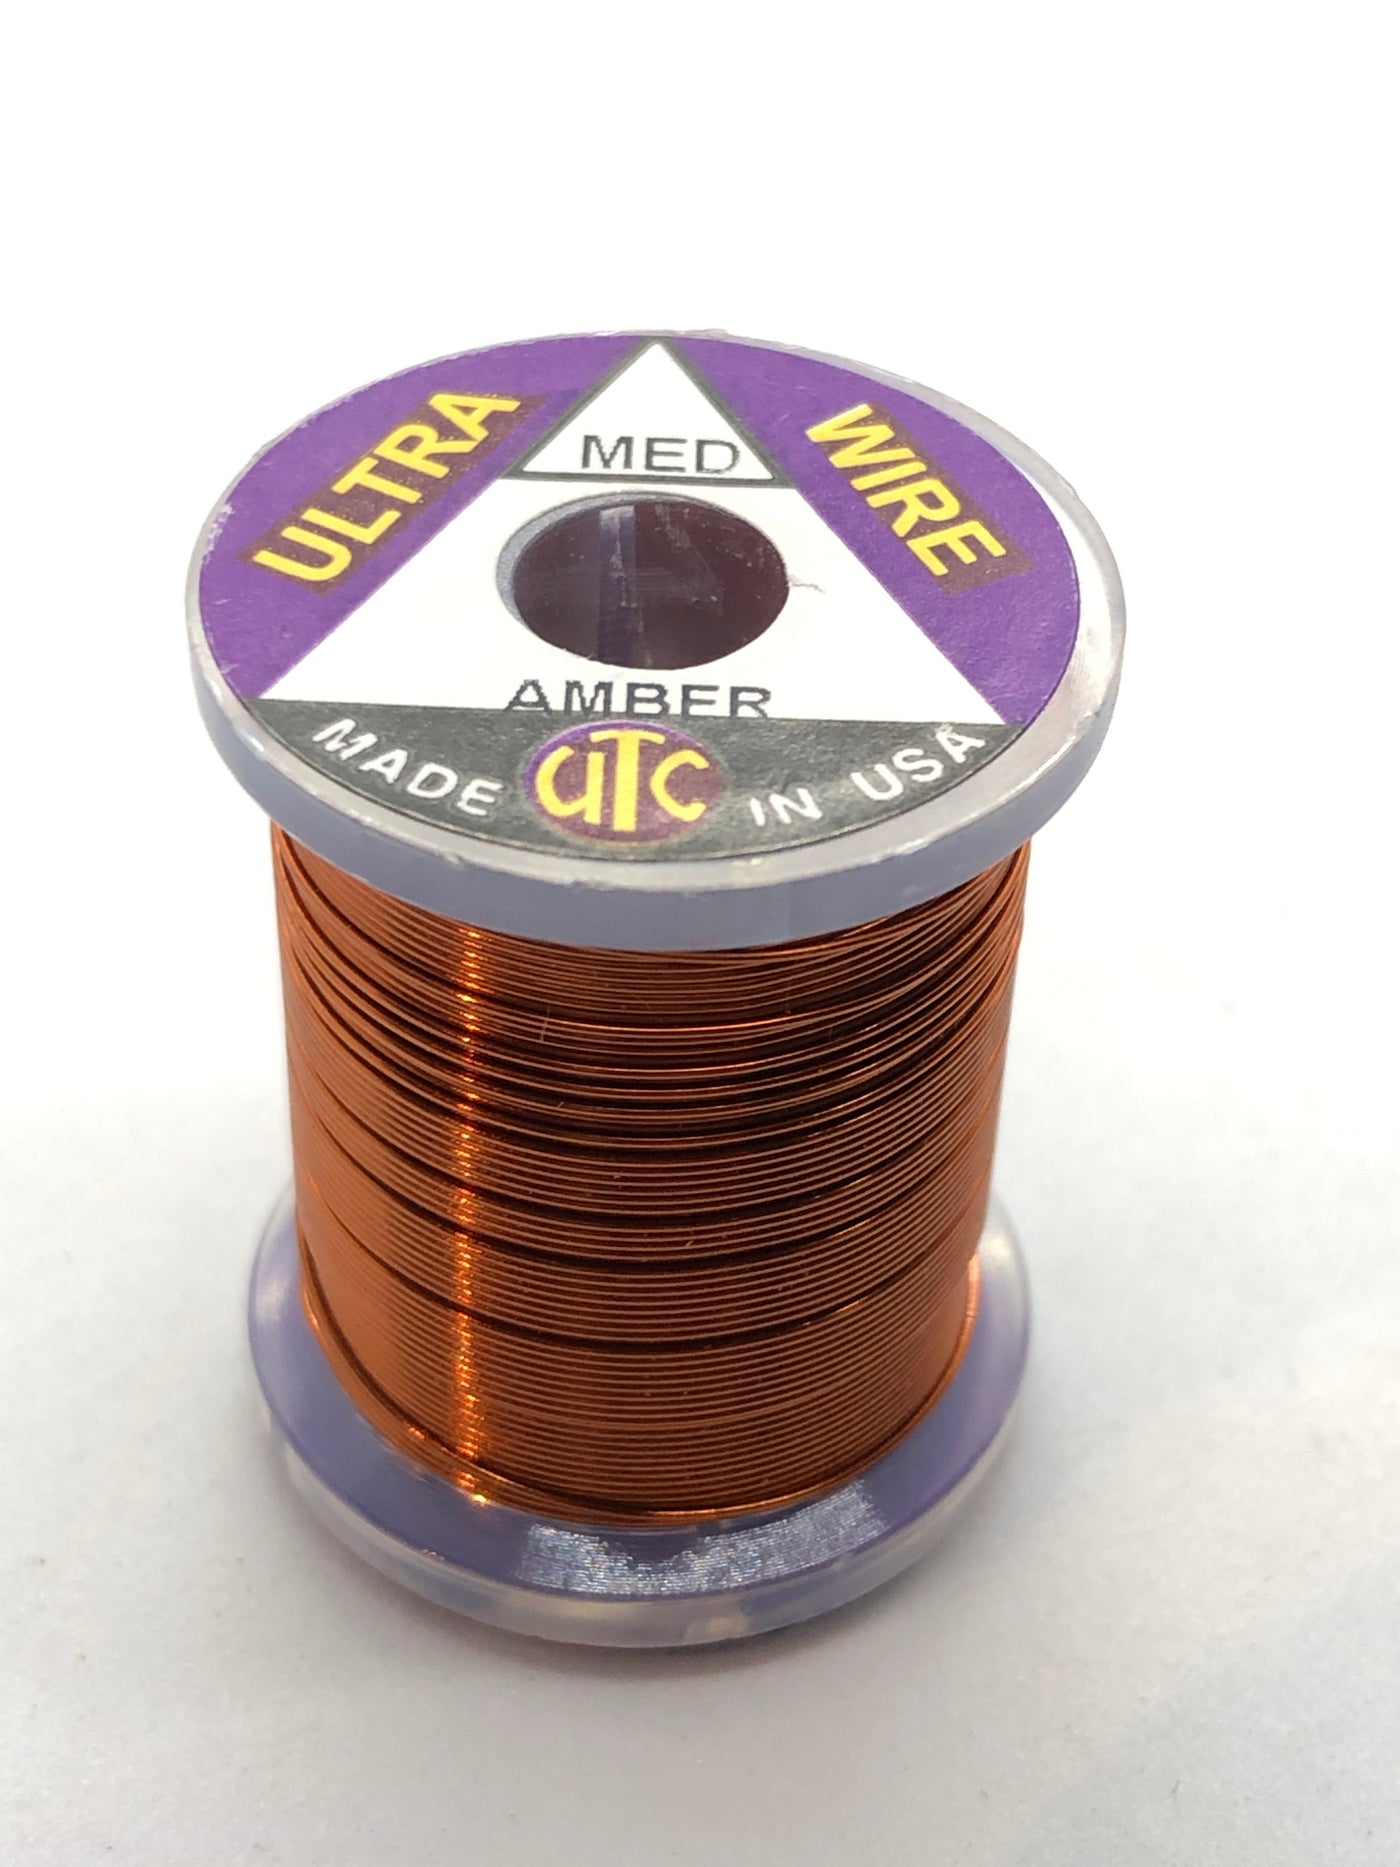 Ultra Wire Small